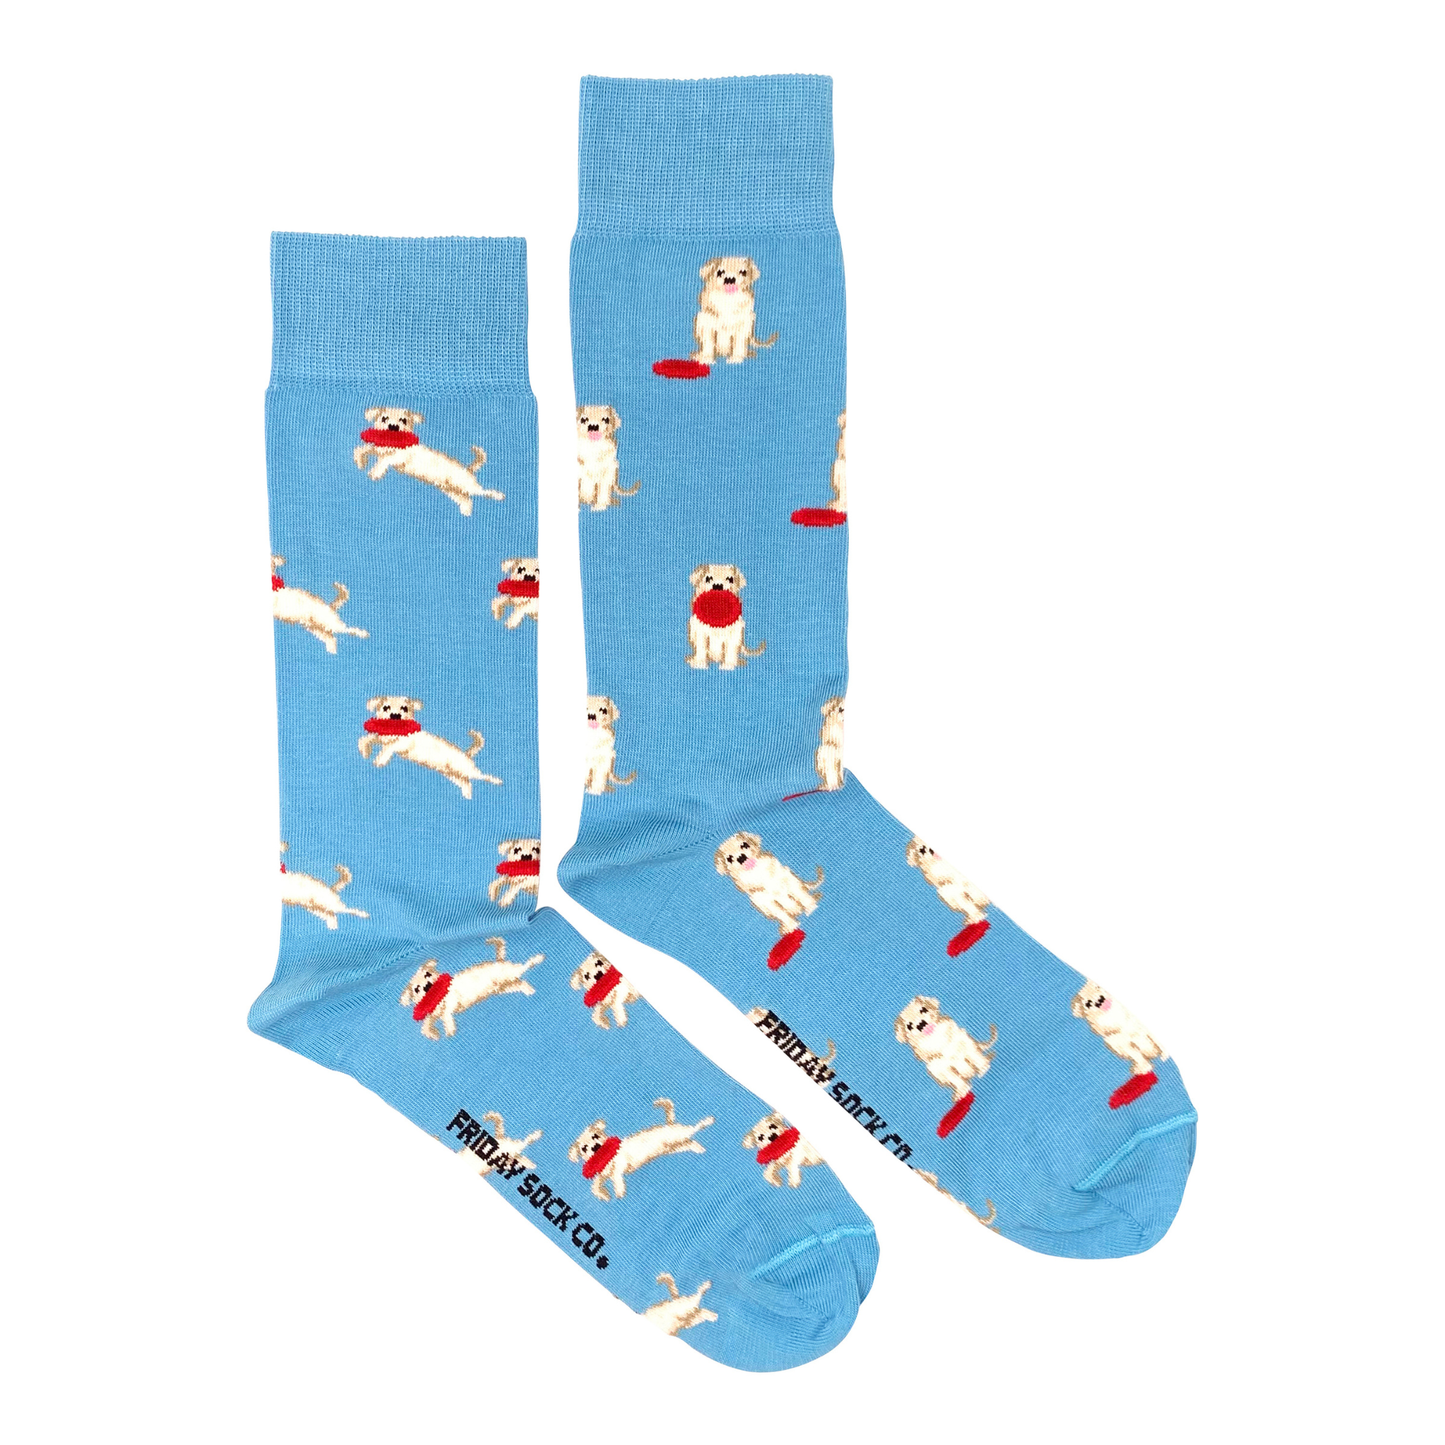 Men's Socks | Dog & Frisbee | Canadian | Ethically Made